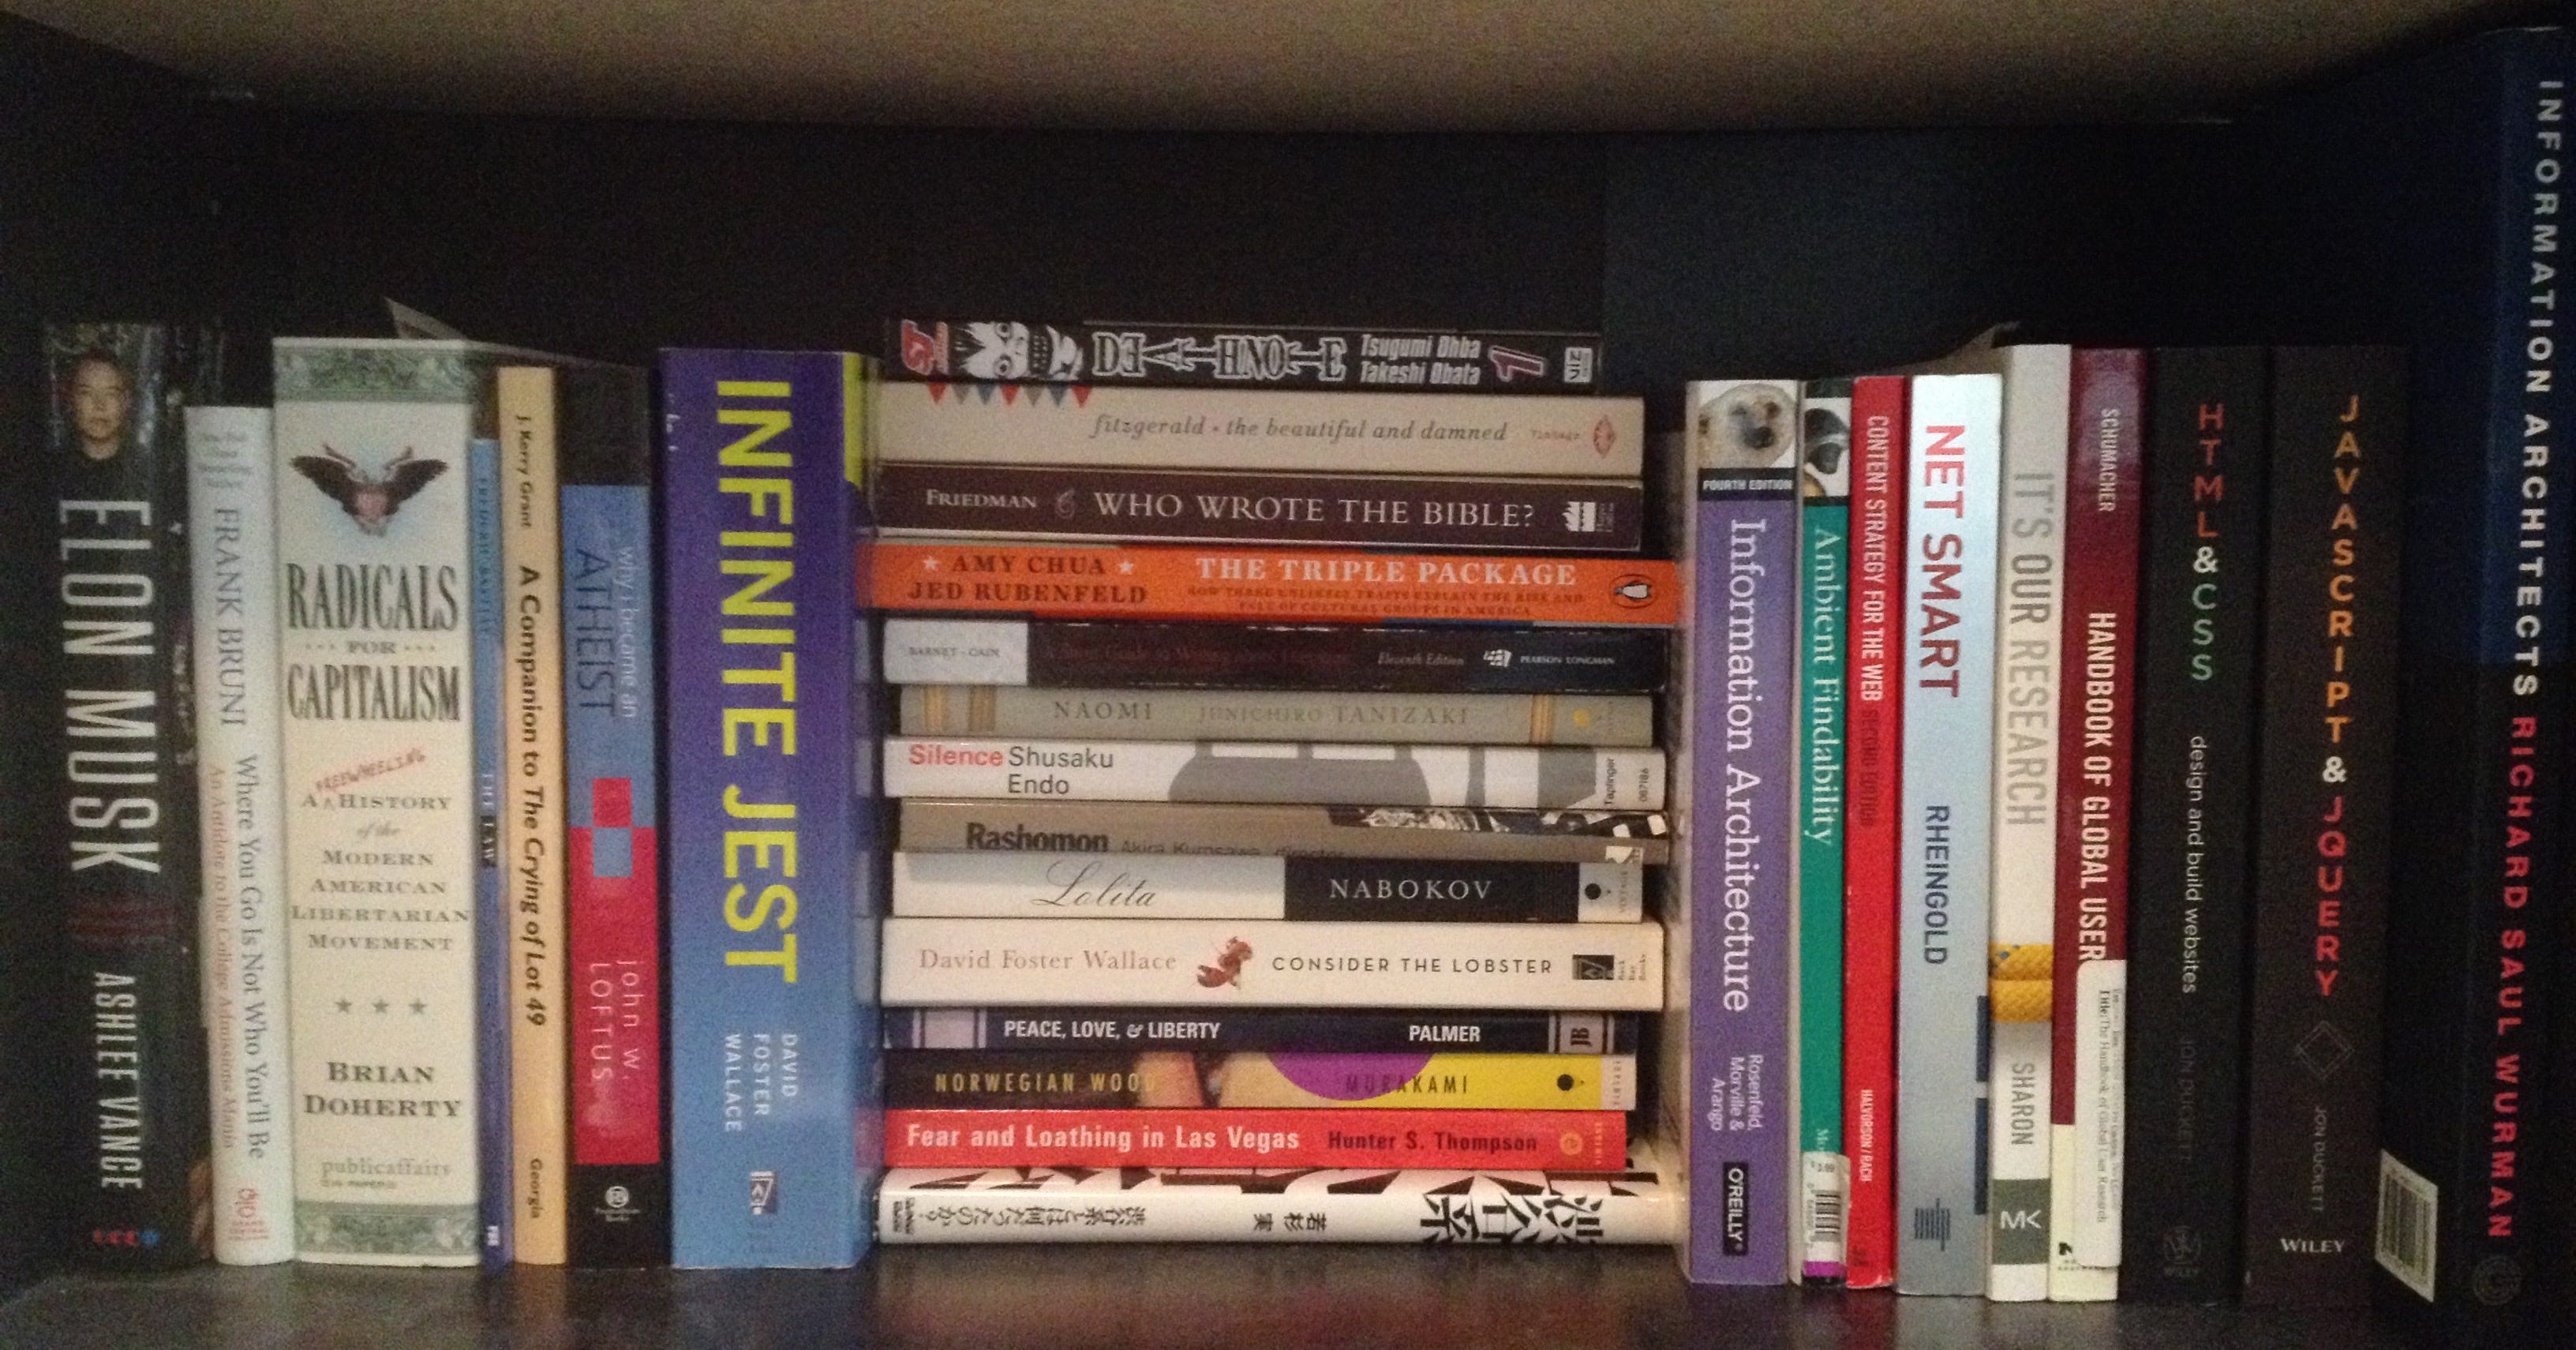 Understanding Information Architecture Via My Bookshelf